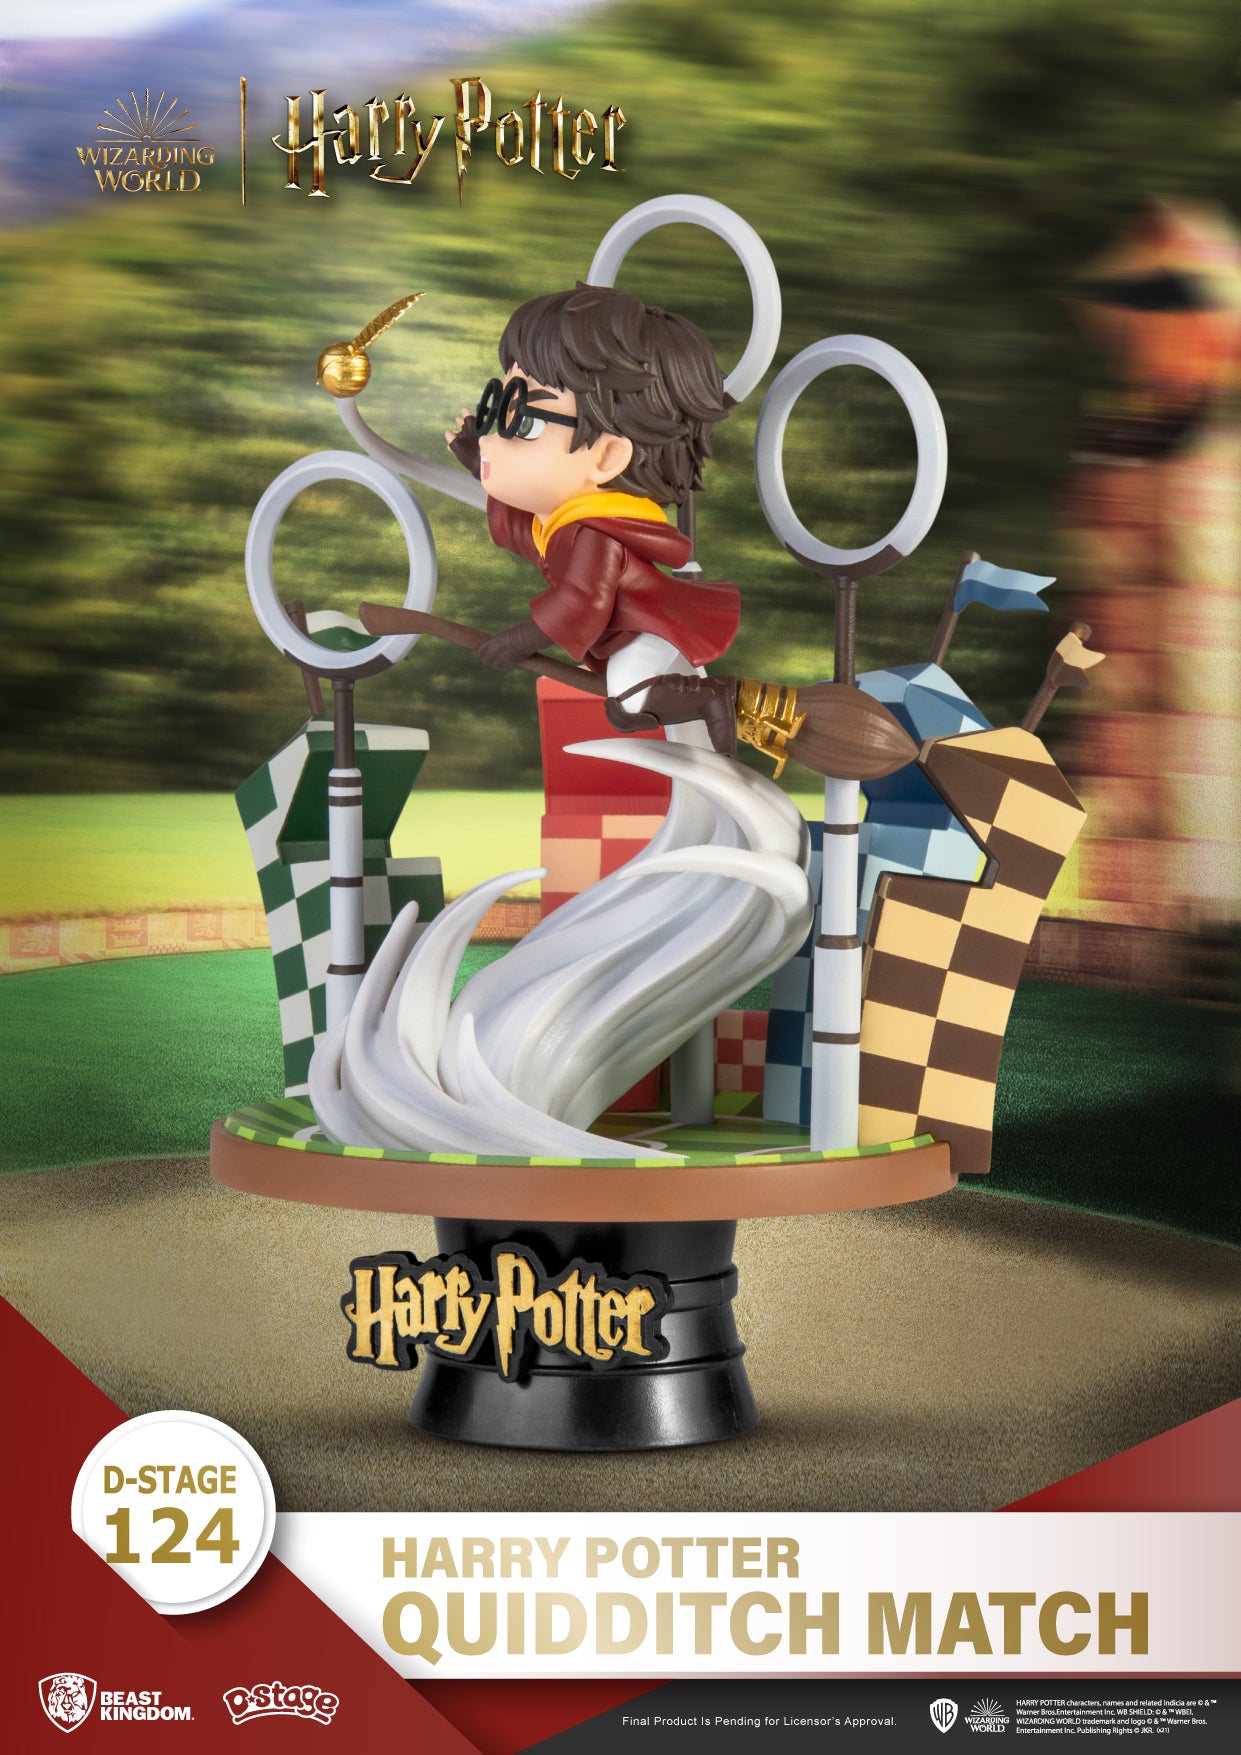 Harry Potter-Quidditch Match(D-Stage) DS-124